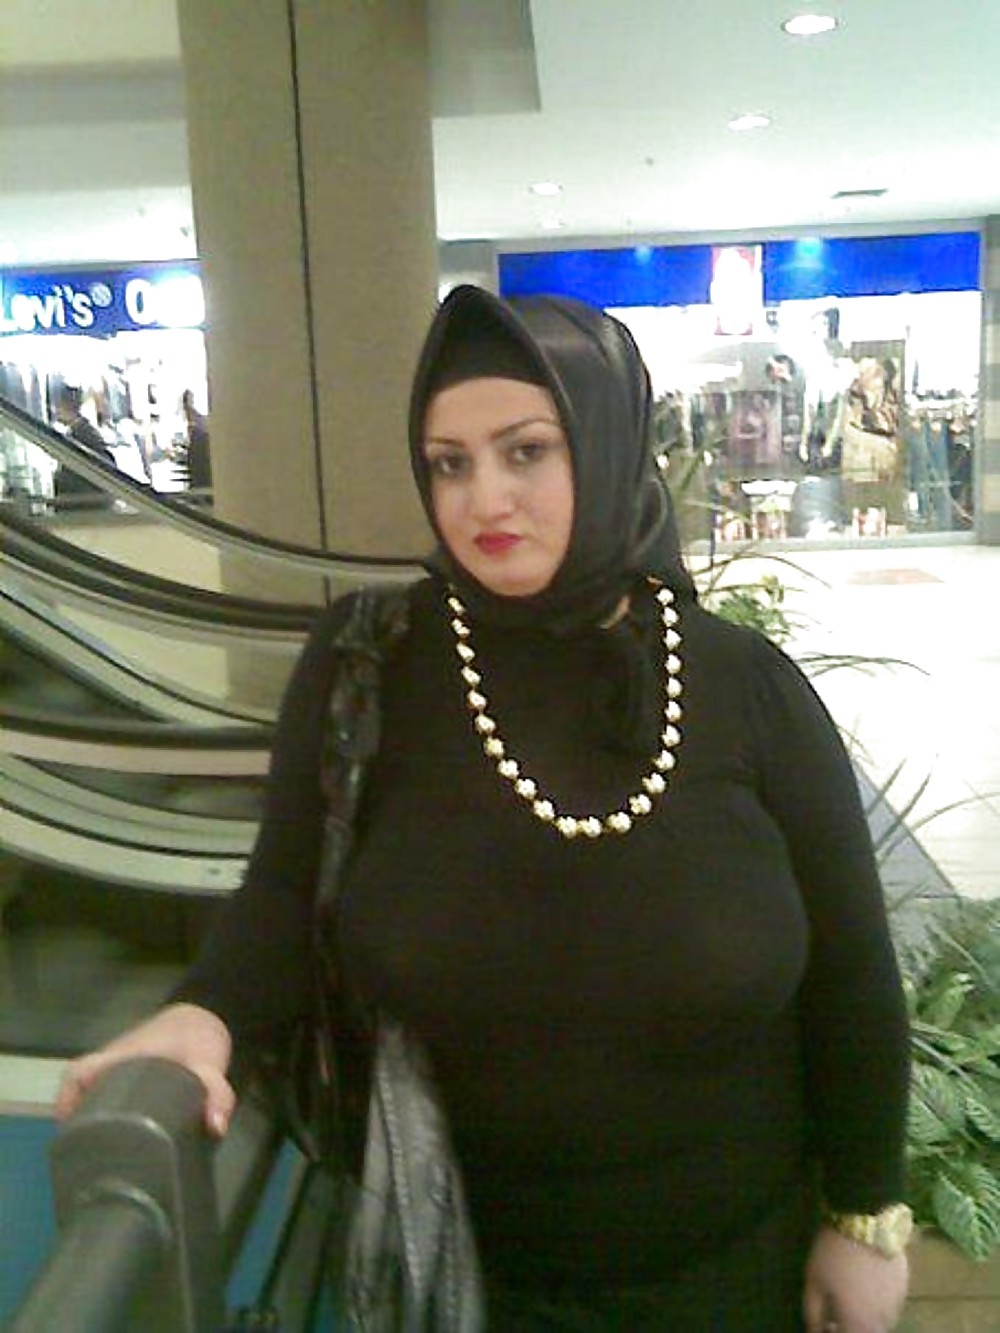 Sex voluptous arab woman image